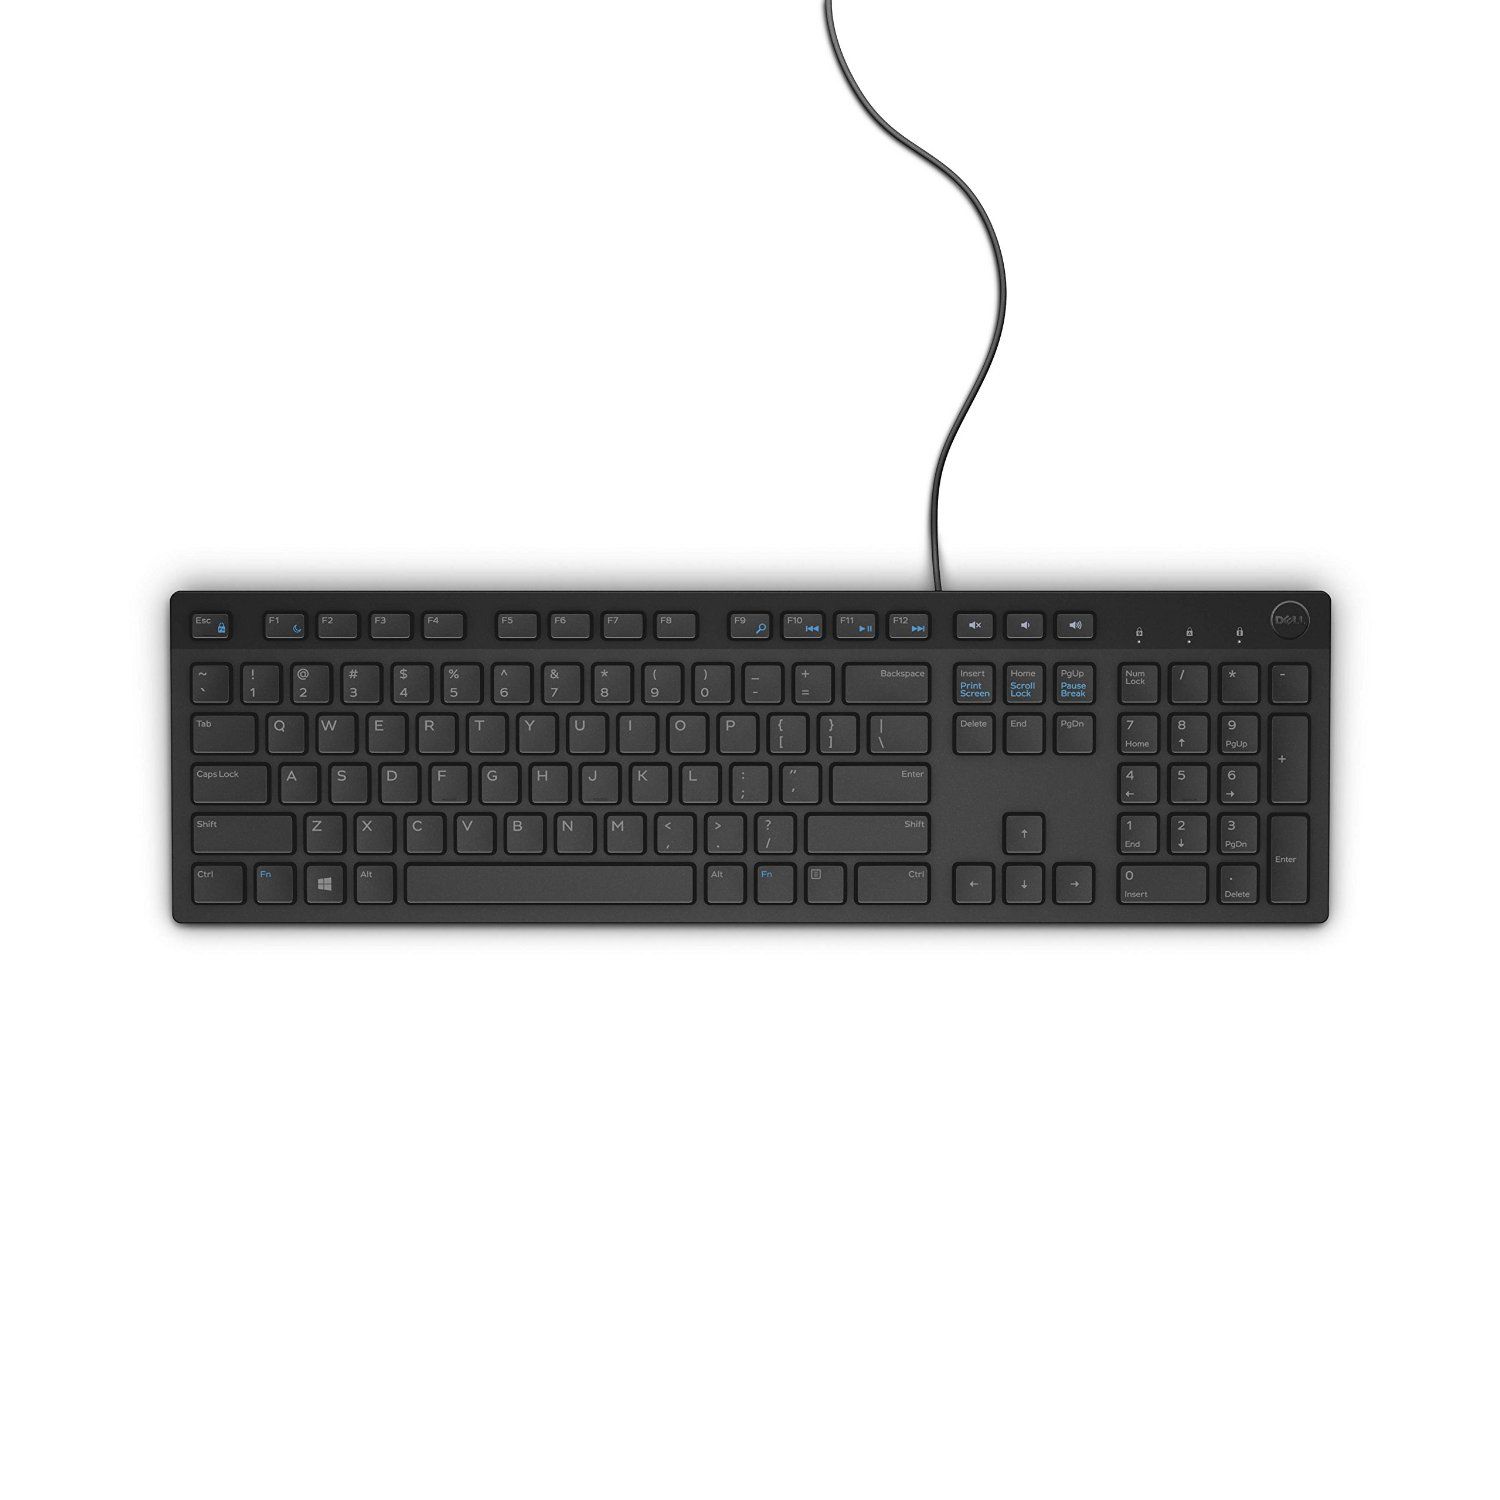 Dell KB216 USB Desktop Keyboard Black With Wire